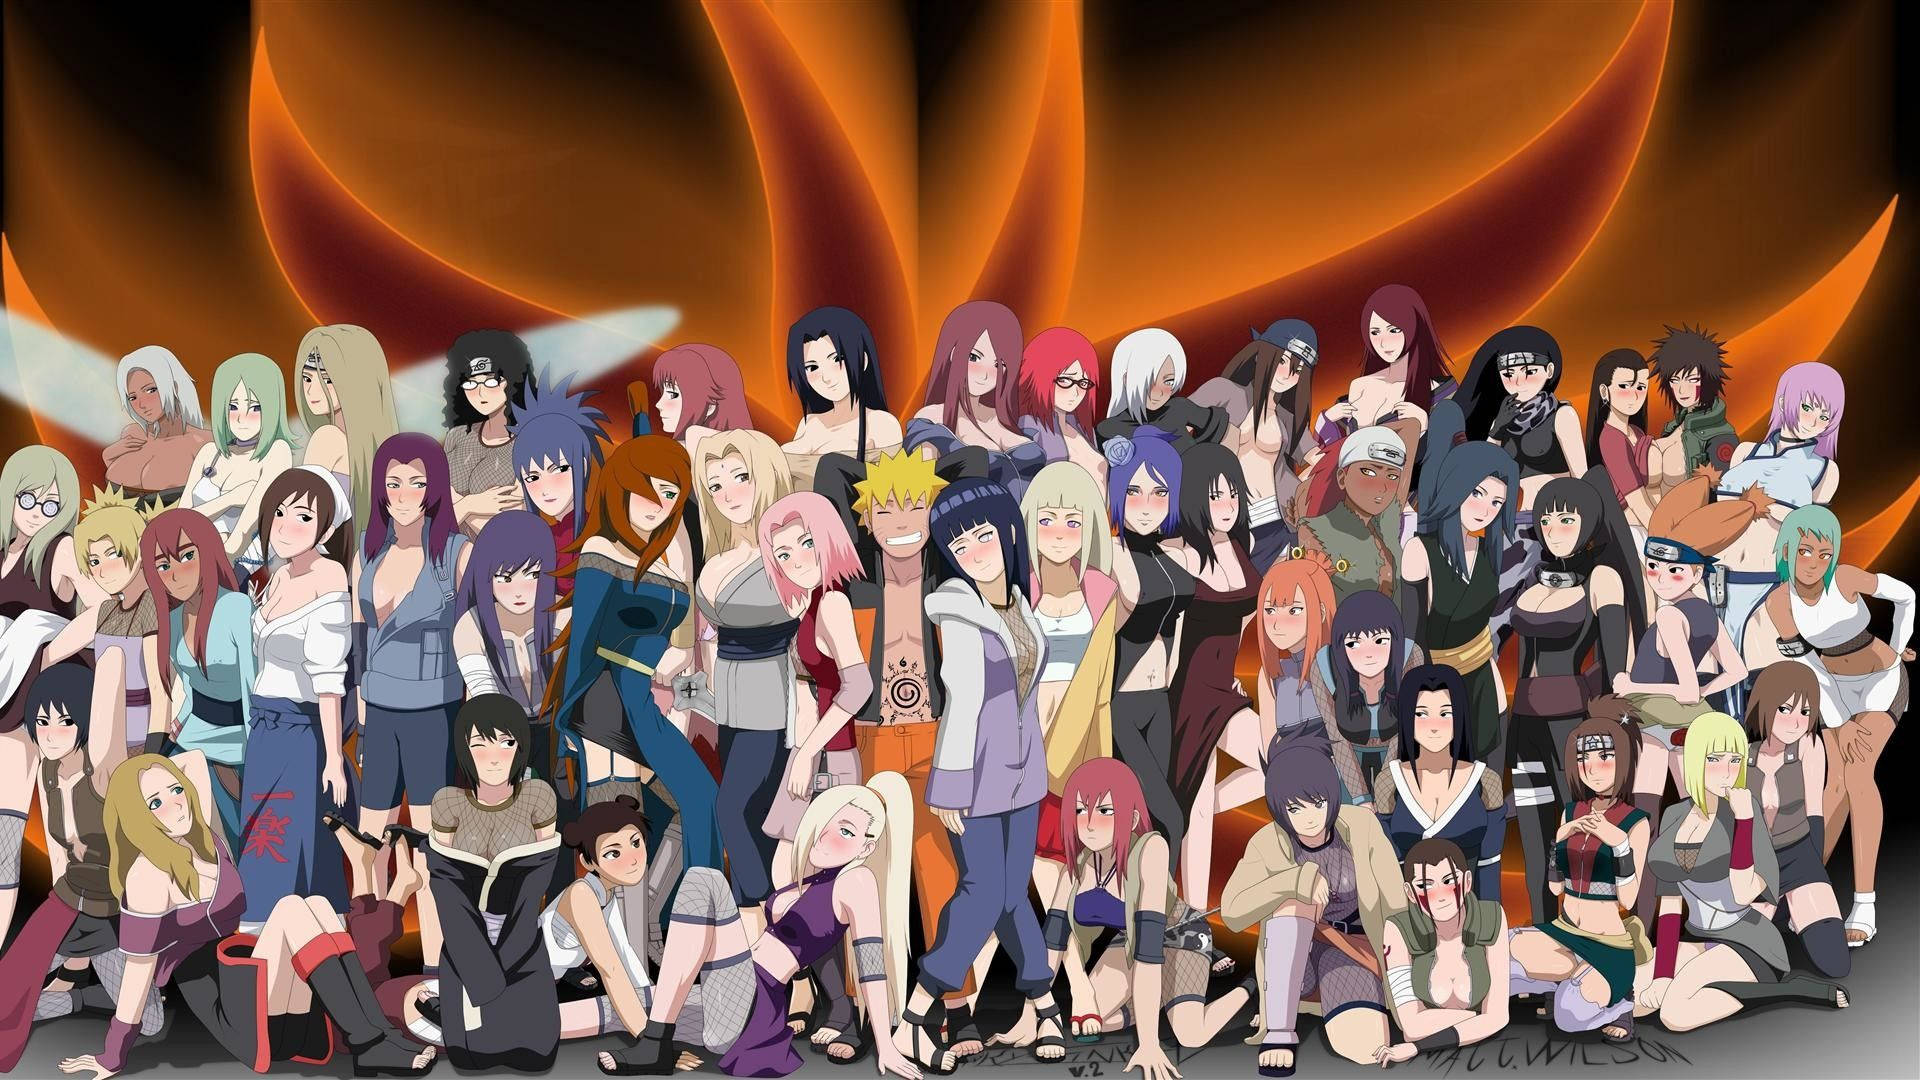 Naruto Shippuden - Naruto Surrounded by the Women of Konoha Wallpaper